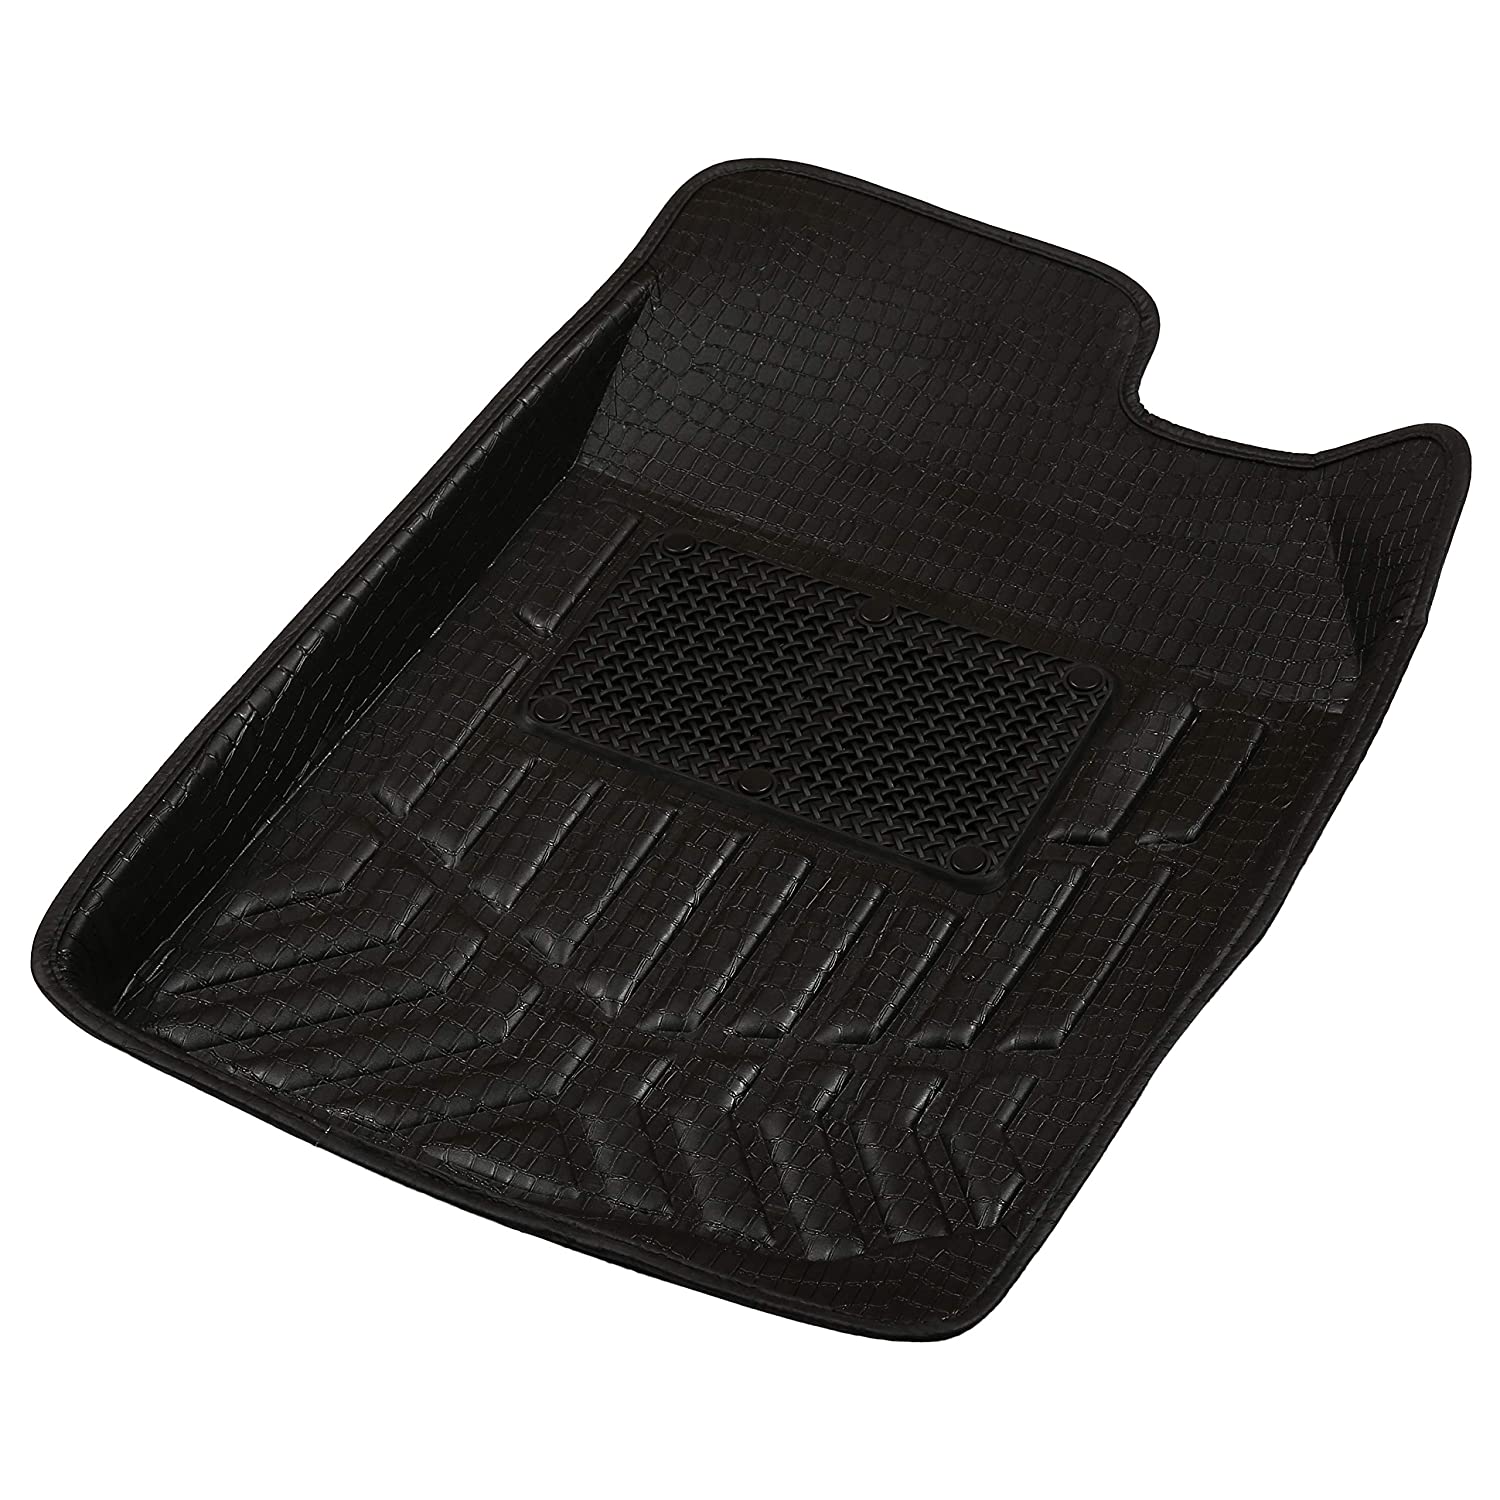 Drivn 3D Customised Car Floor Mat for Hyundai Creta - Black (Set of 3)